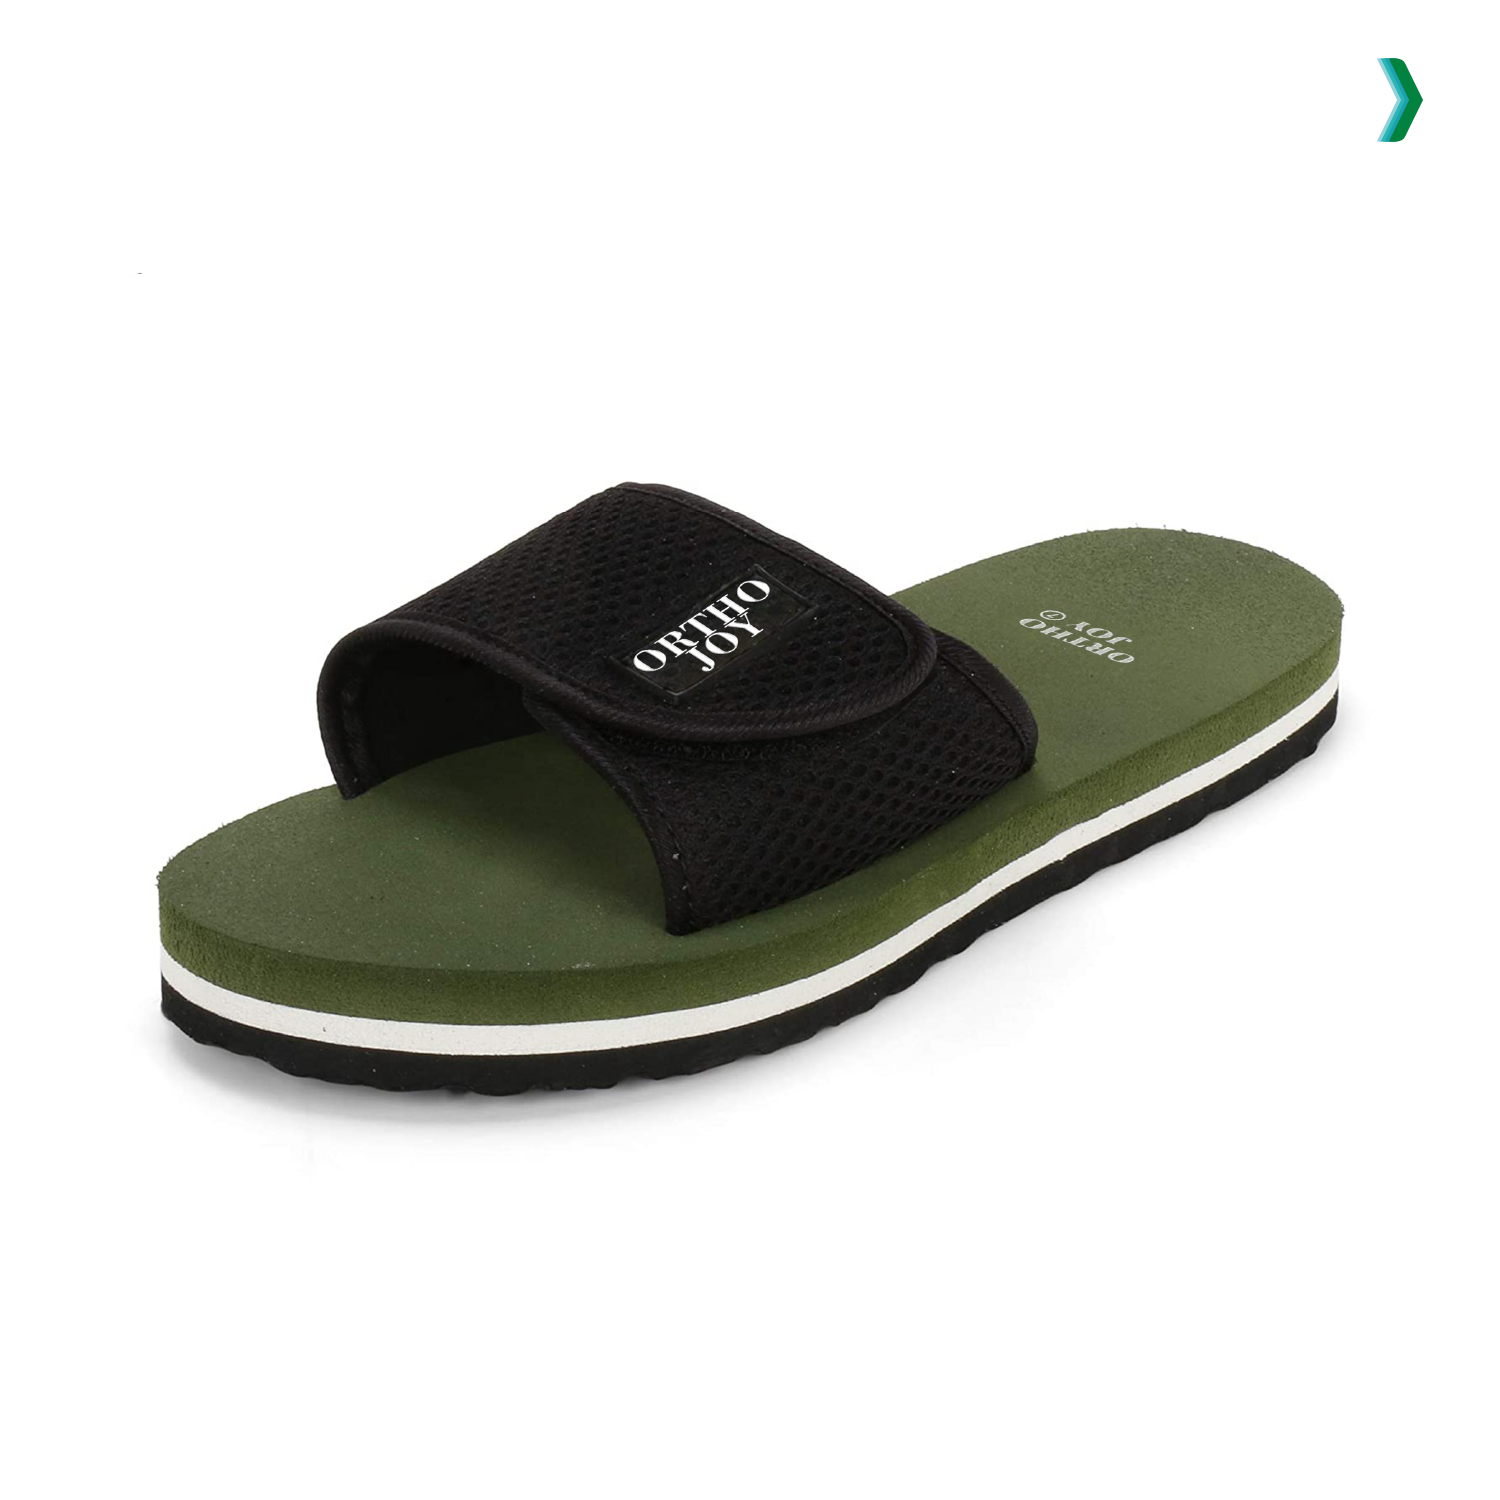 Buy Women Beige Casual Slippers Online | SKU: 41-4202-20-36-Metro Shoes